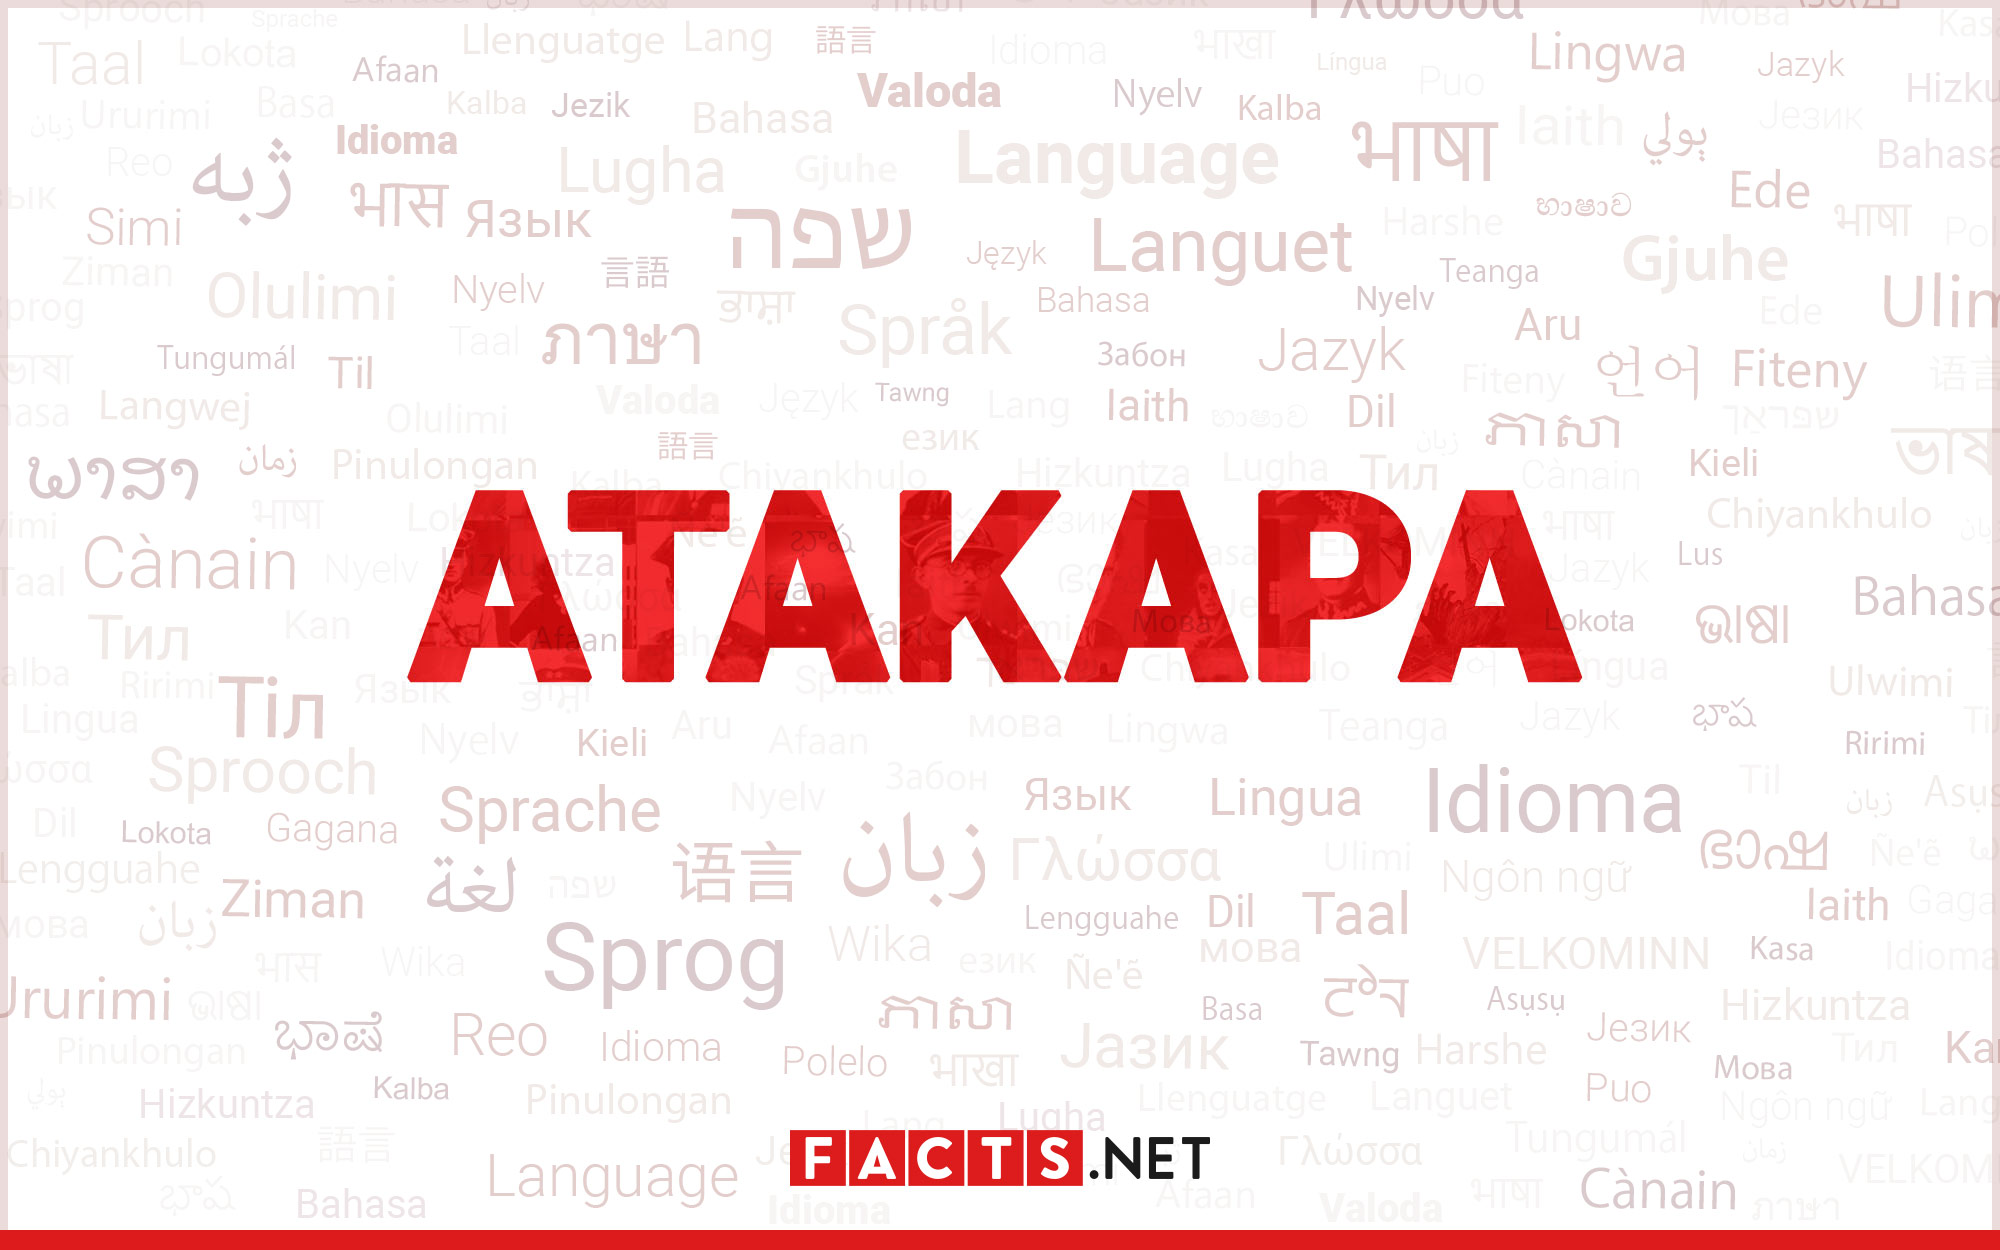 15-captivating-facts-about-atakapa